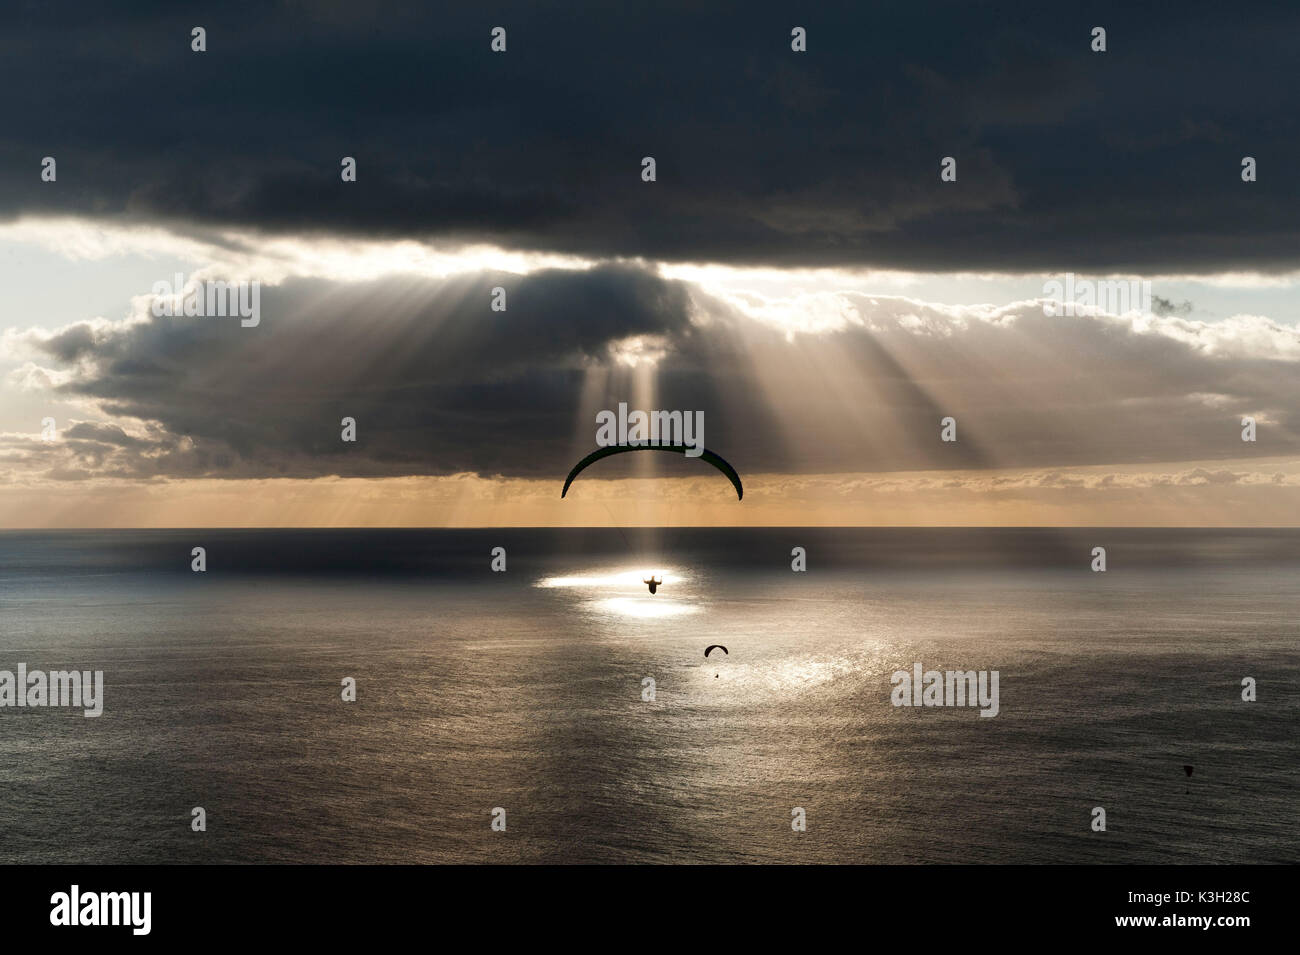 Gleitschirm, Abend, Stimmung, den Atlantik und Puerto Naos, Insel La Palma, Kanaren Insel, Luftbild, Spanien Stockfoto